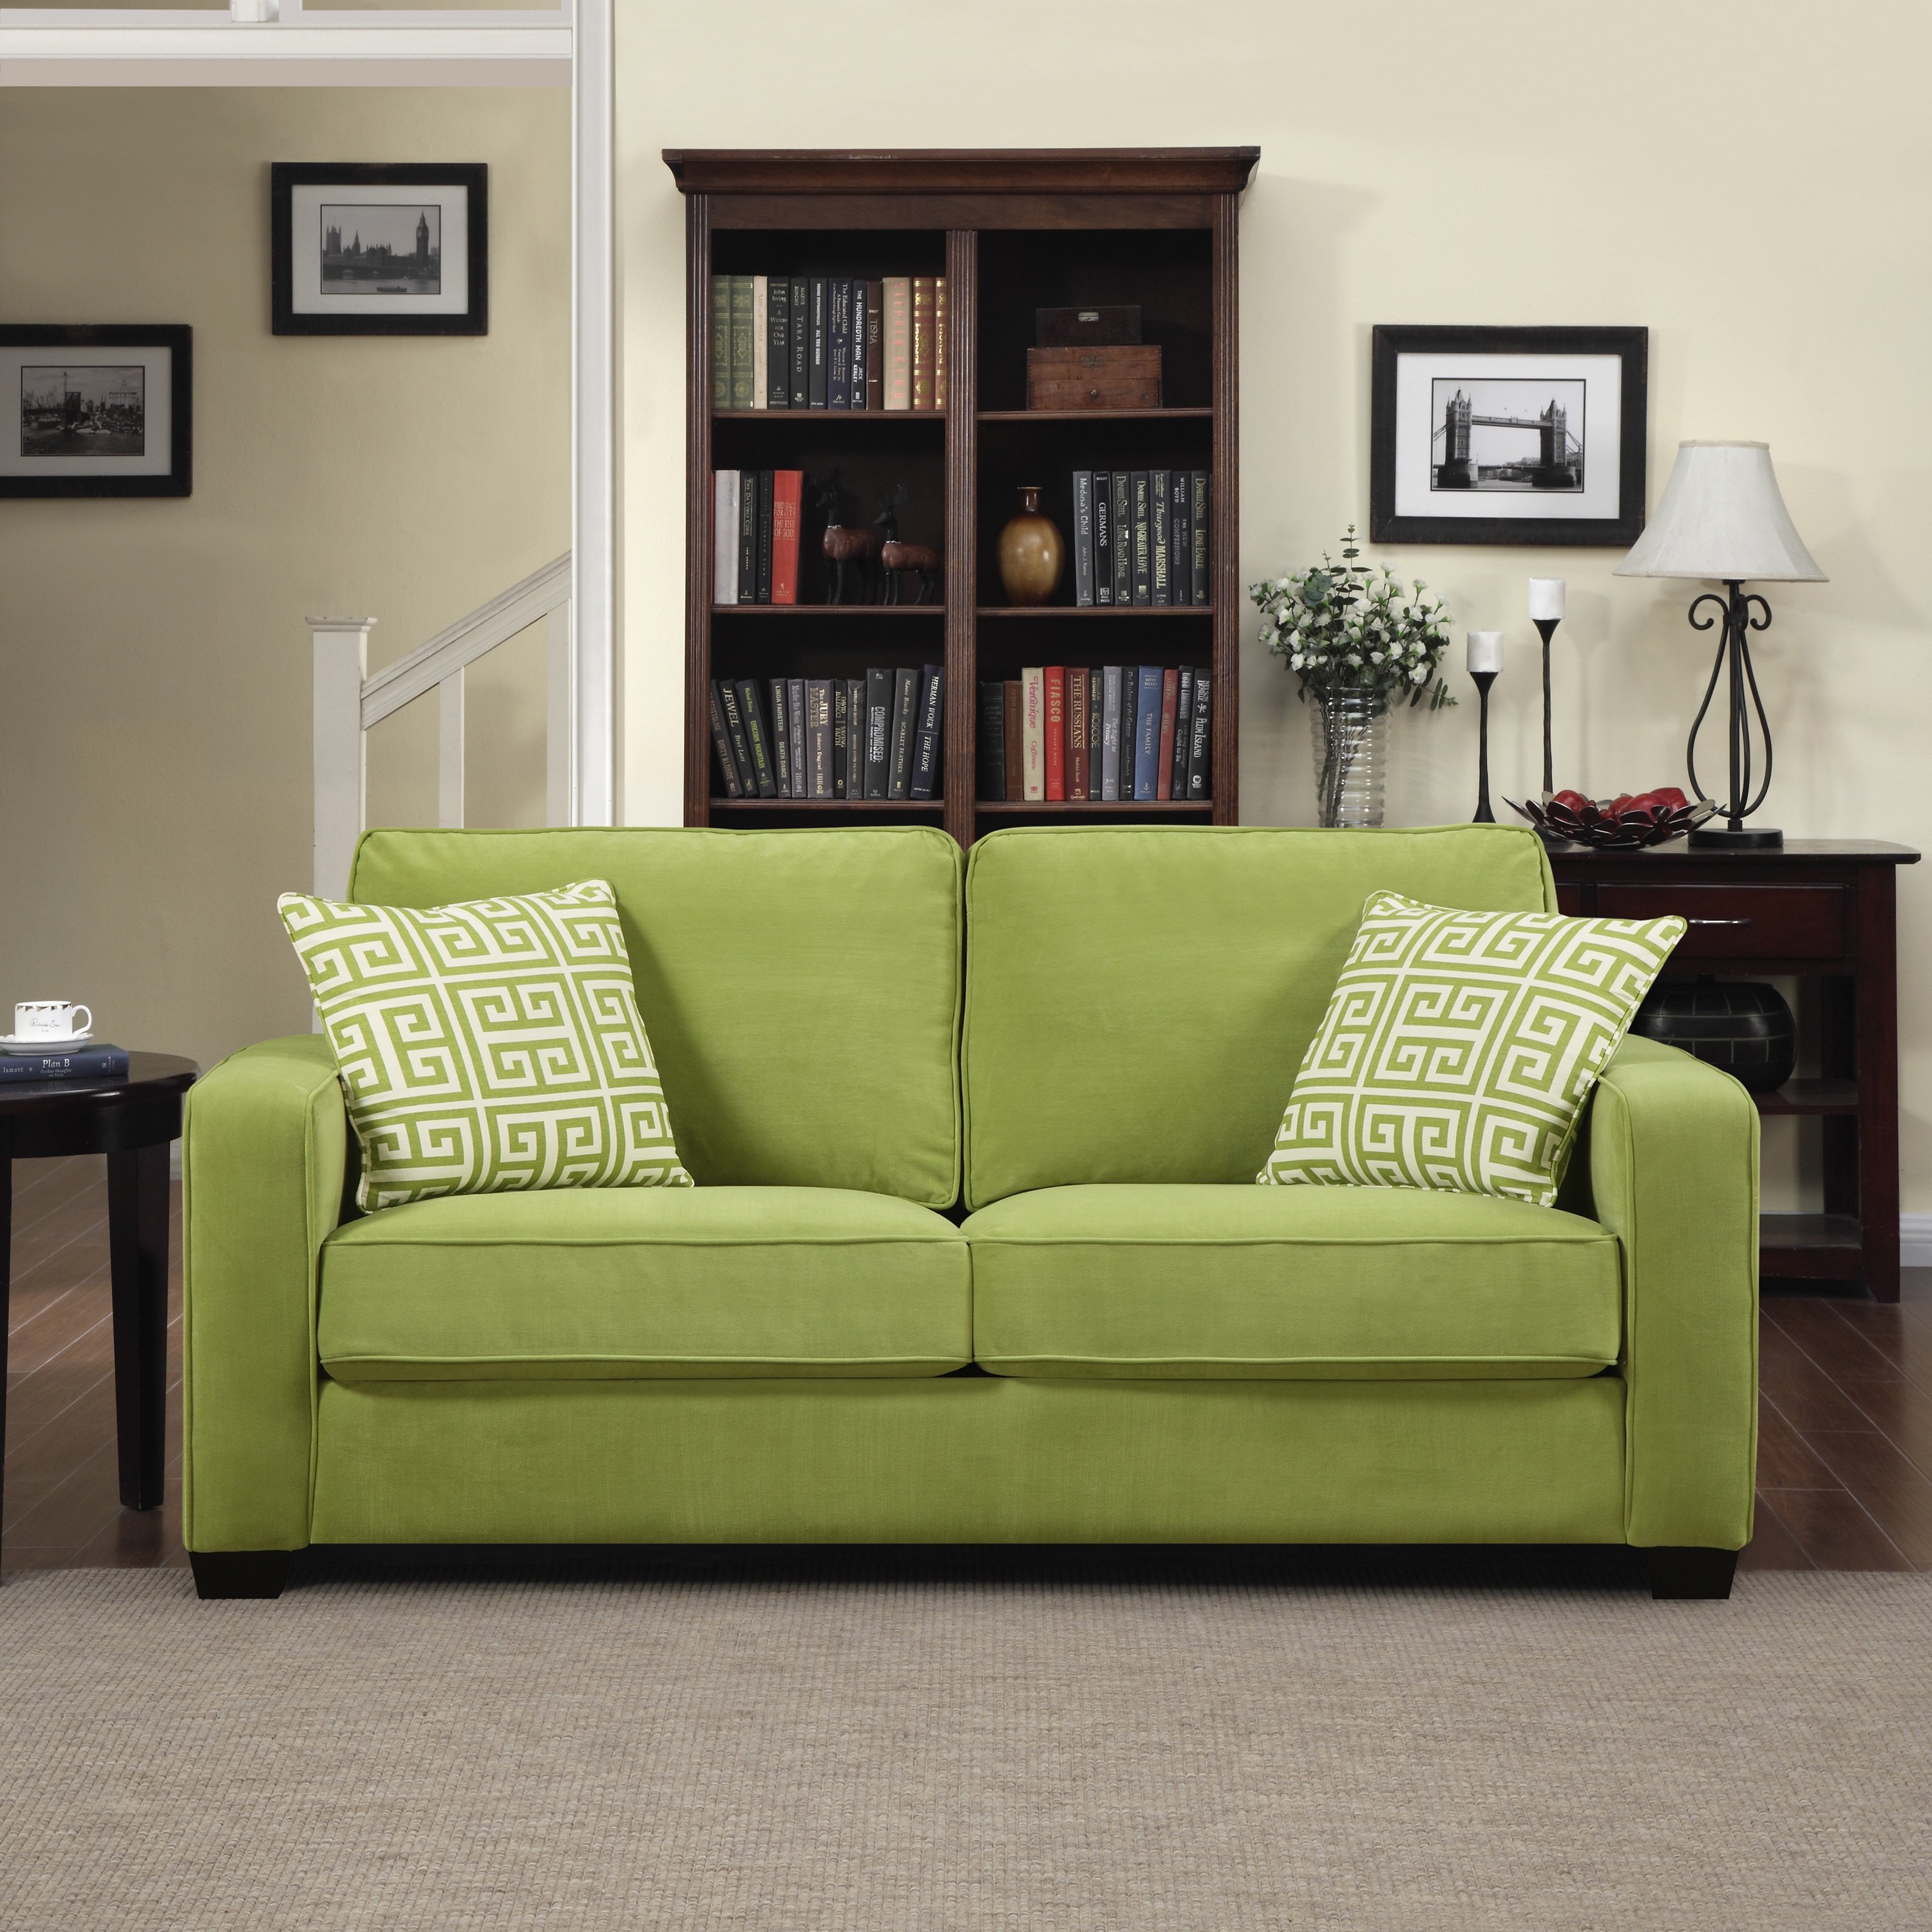 Ярко зеленый диван